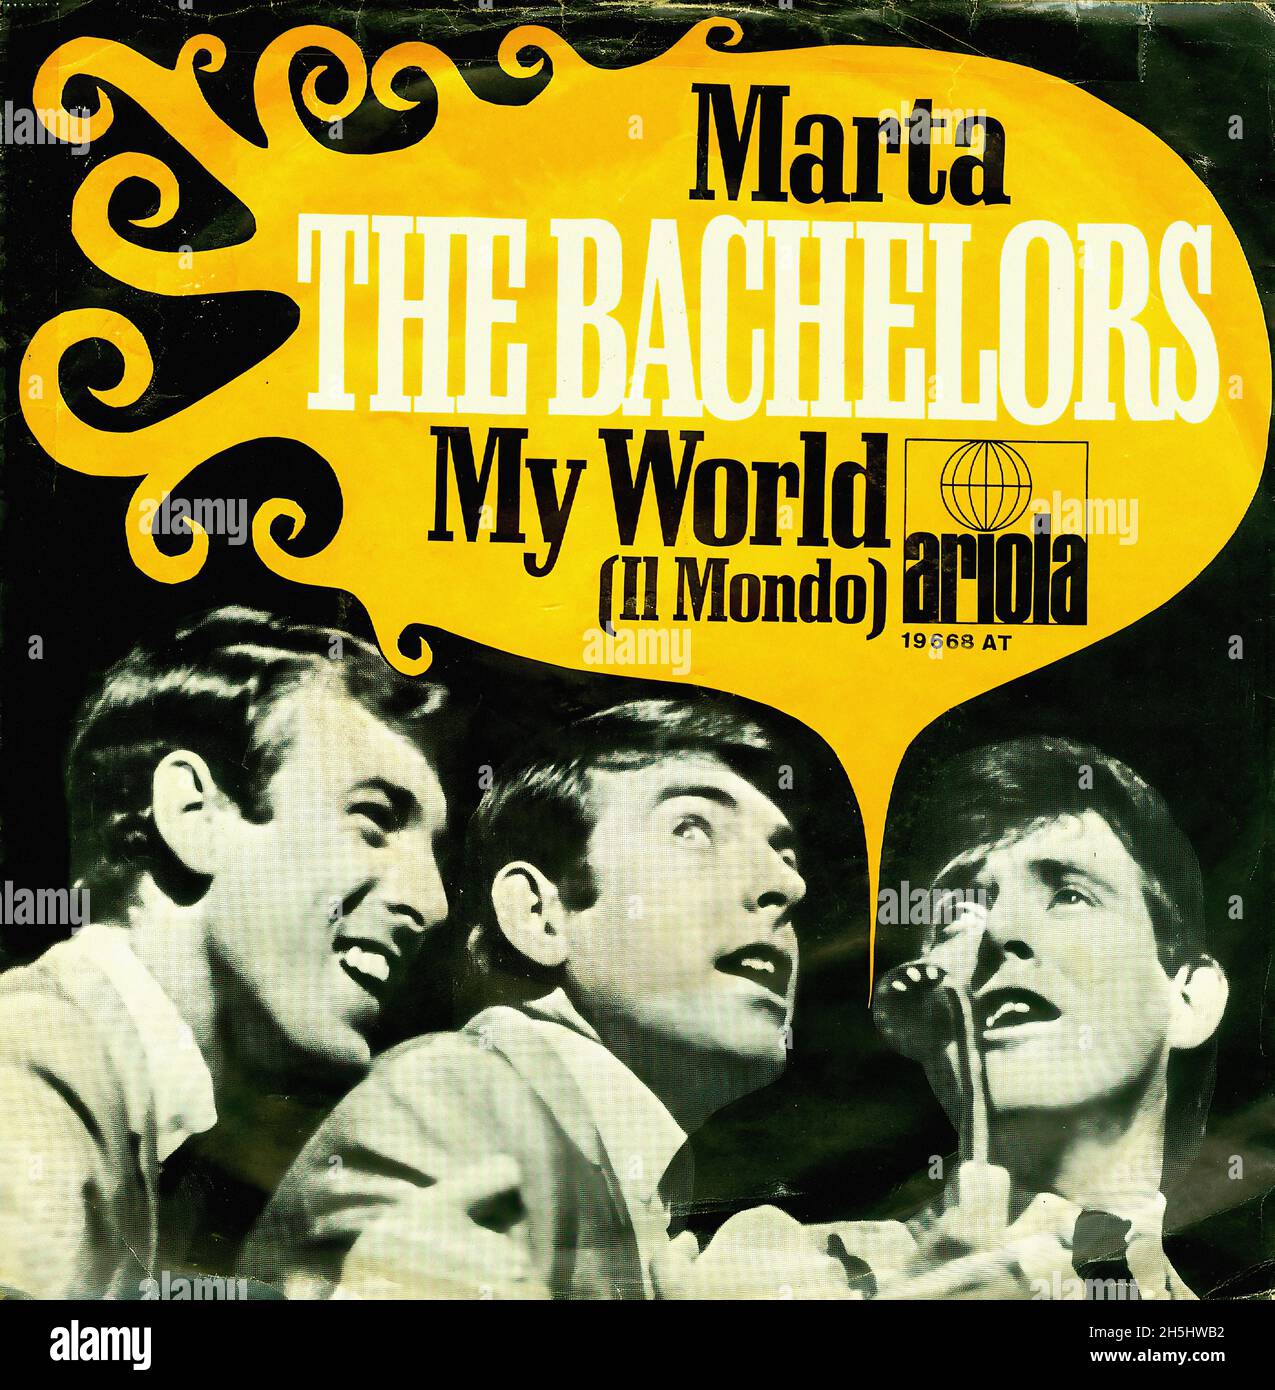 Portada de un solo disco vintage - Bachelors, The - Marta - D - 1967  Fotografía de stock - Alamy